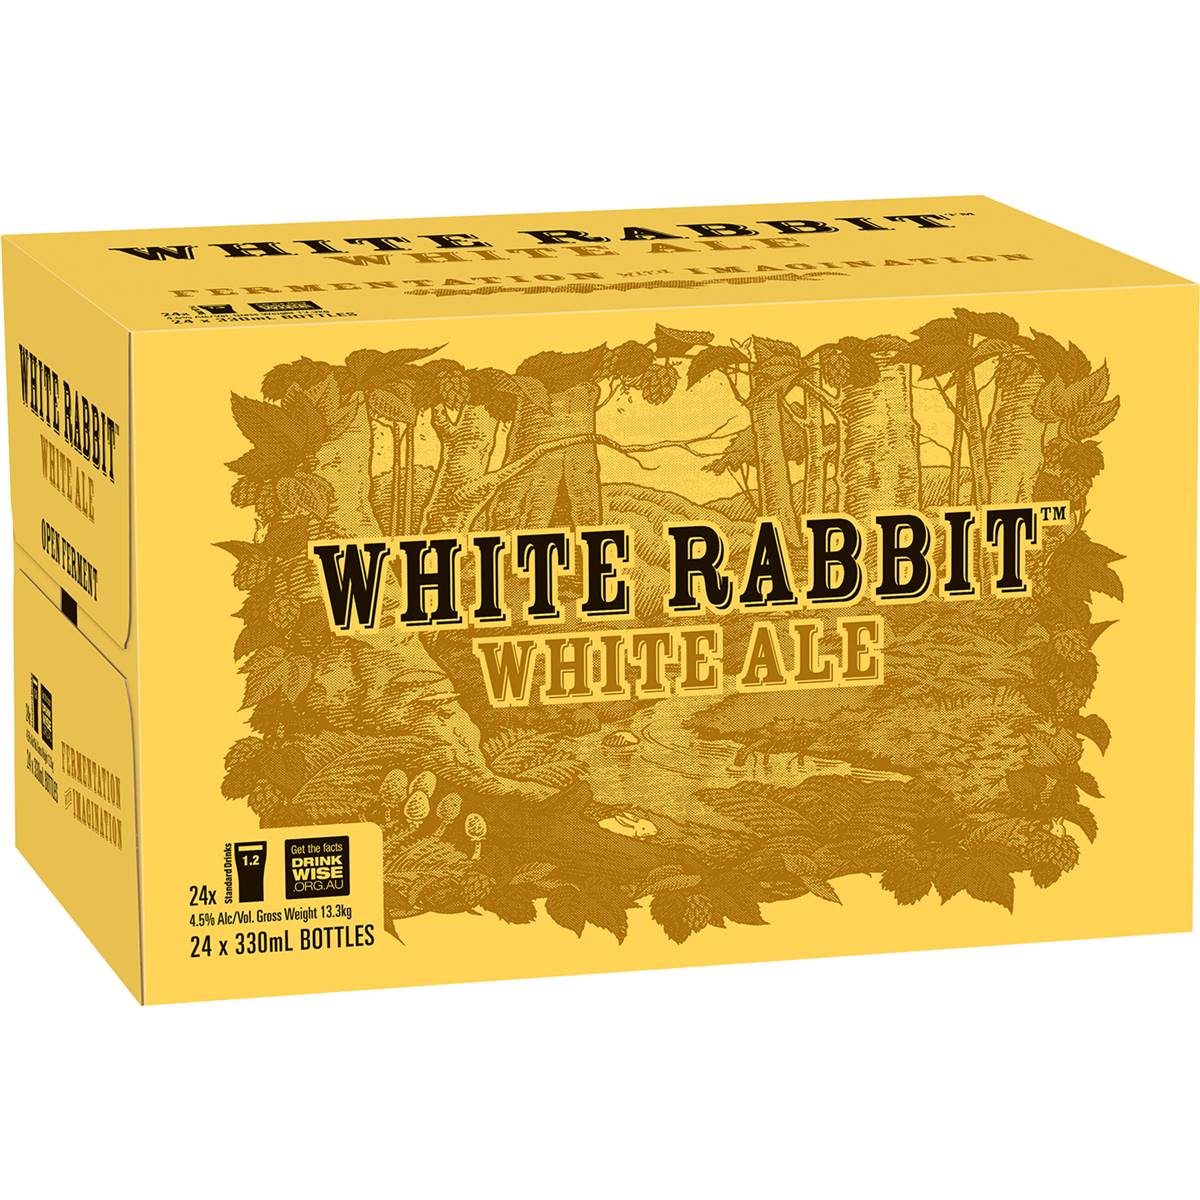 Calories in White Rabbit White Ale Bottles